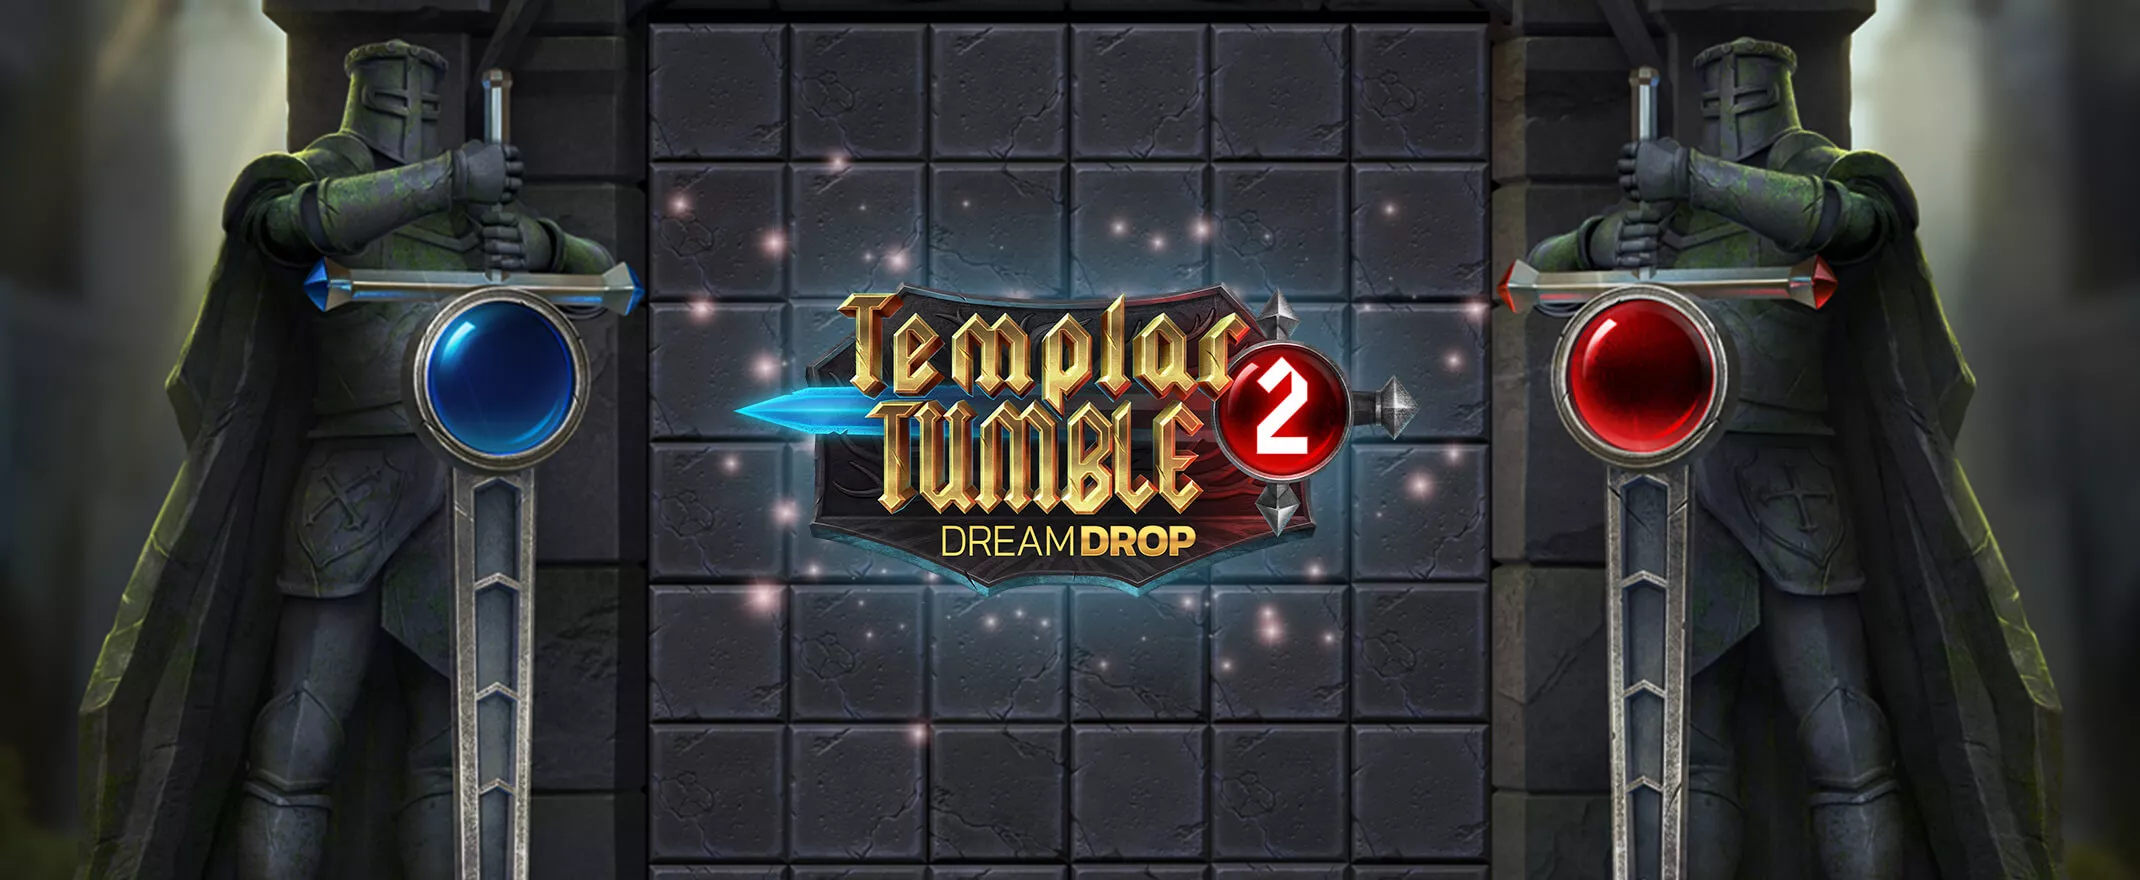 Relax Gaming Releases Templar Tumble 2 Dream Drop